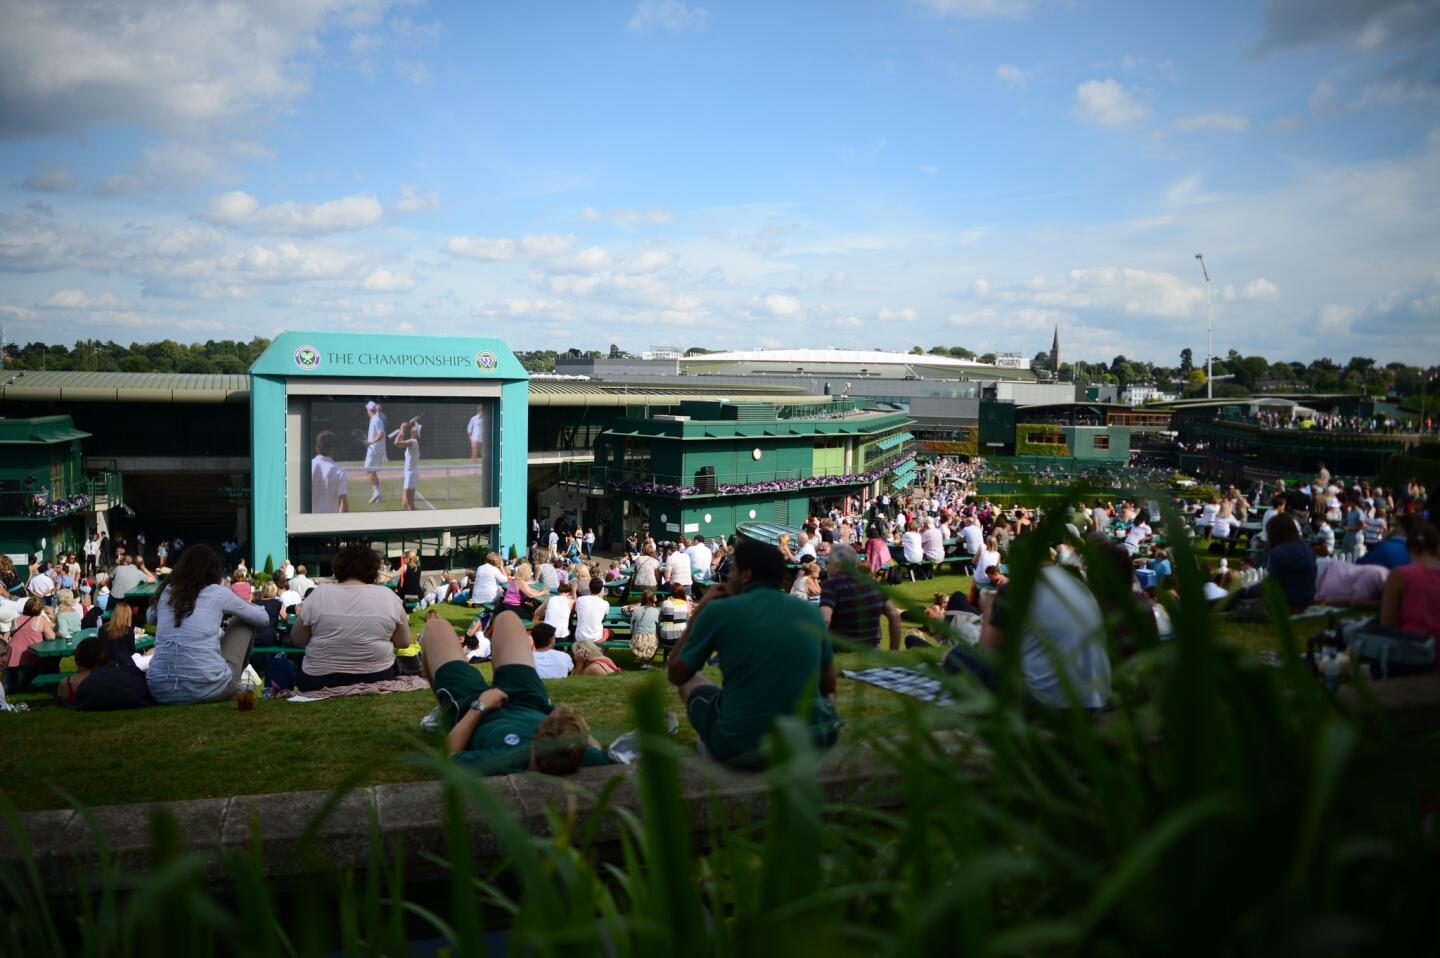 Wimbledon, London, finals July 5 and 6